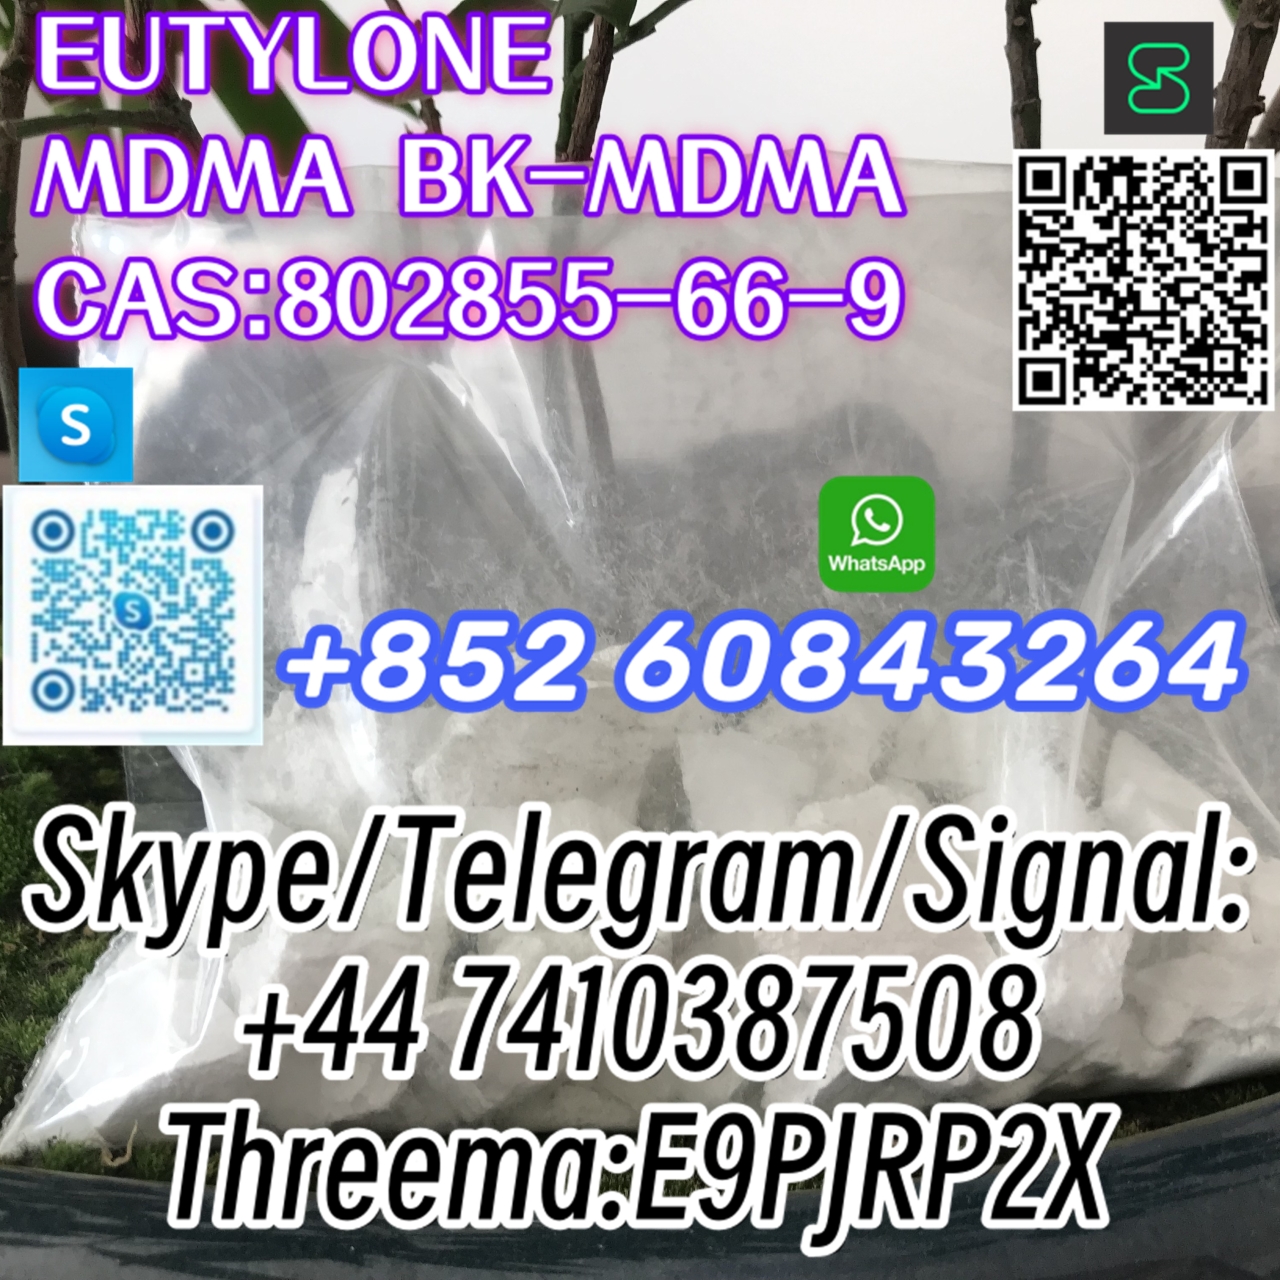 EUTYLONE MDMA BK-MDMA CAS:802855-66-9 Skype/Telegram/Signal: +44 7410387508 Threema:E9PJRP2X-1 24.04.2024 - EUTYLONE  MDMA  BK-MDMA  CAS:802855-66-9   Skype/Telegram/Signal:
+44 7410387508
Threema:E9PJRP2X